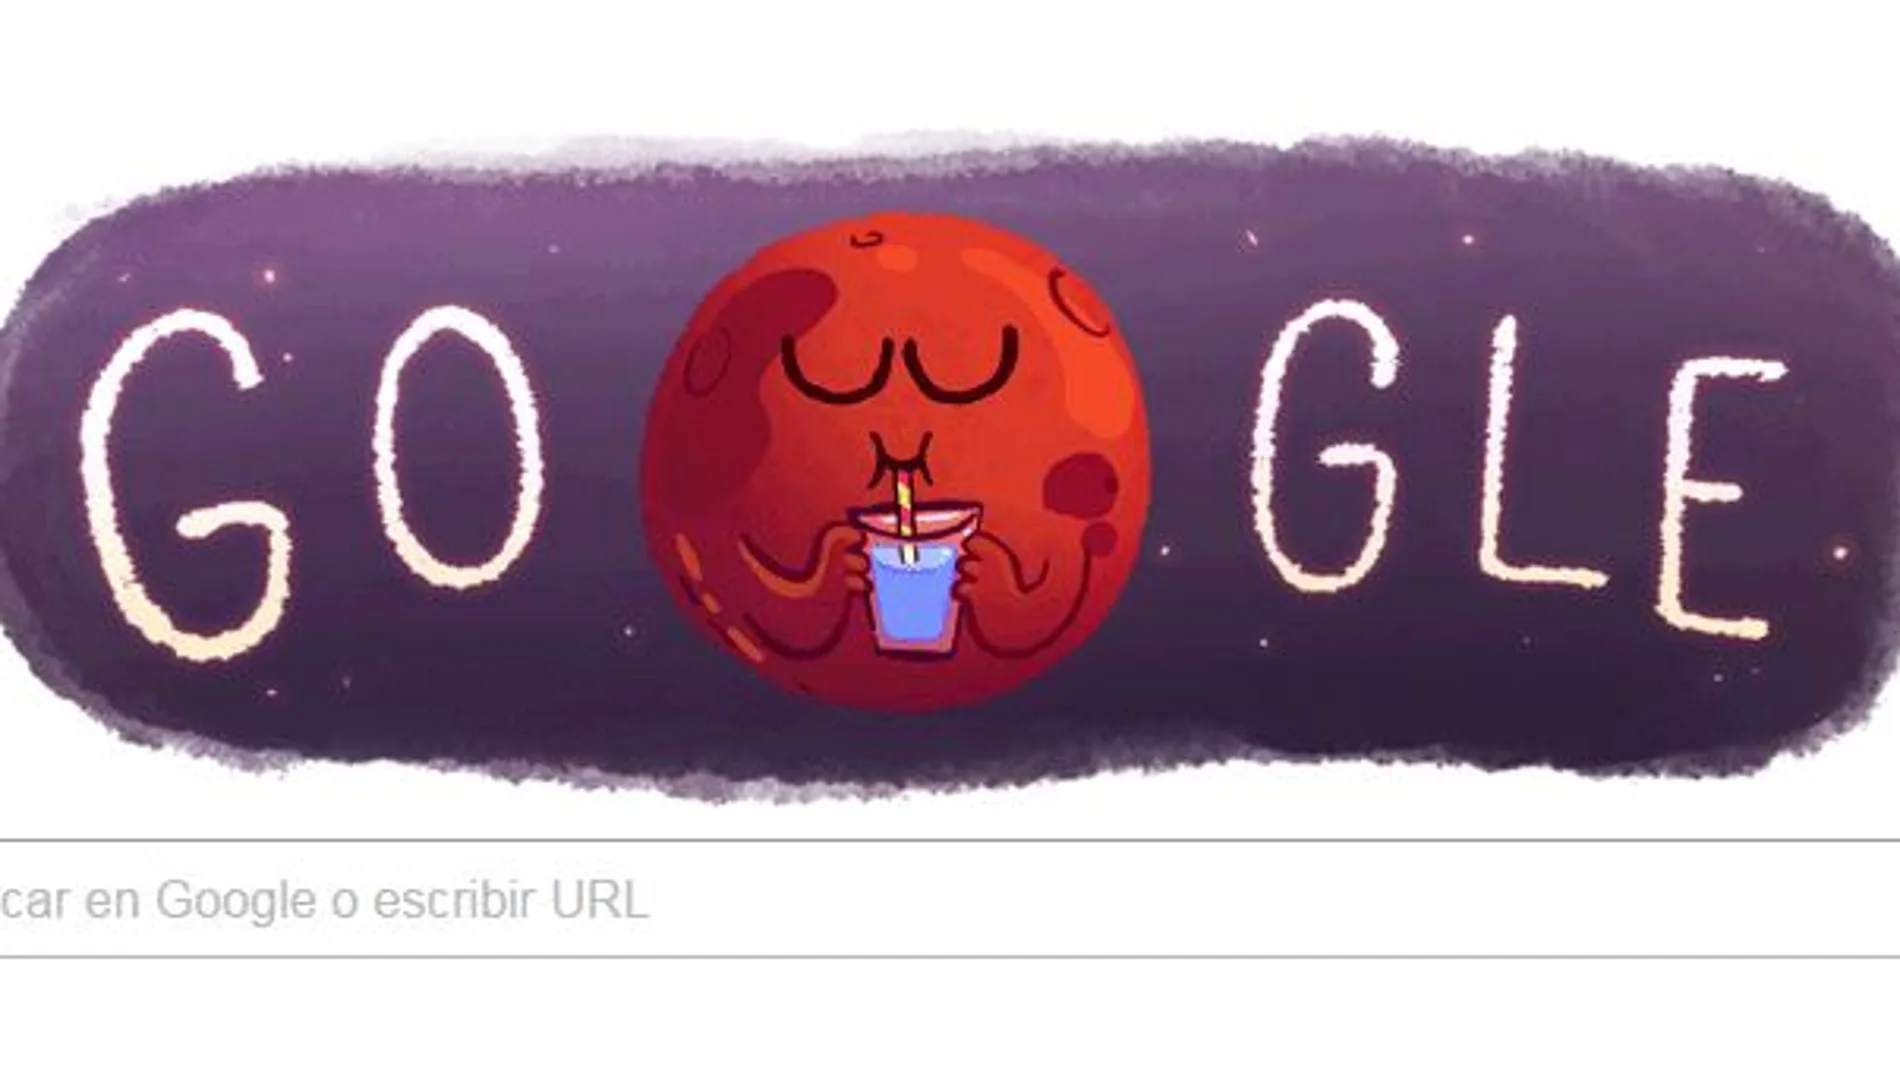 Google improvisa un doodle sobre Marte